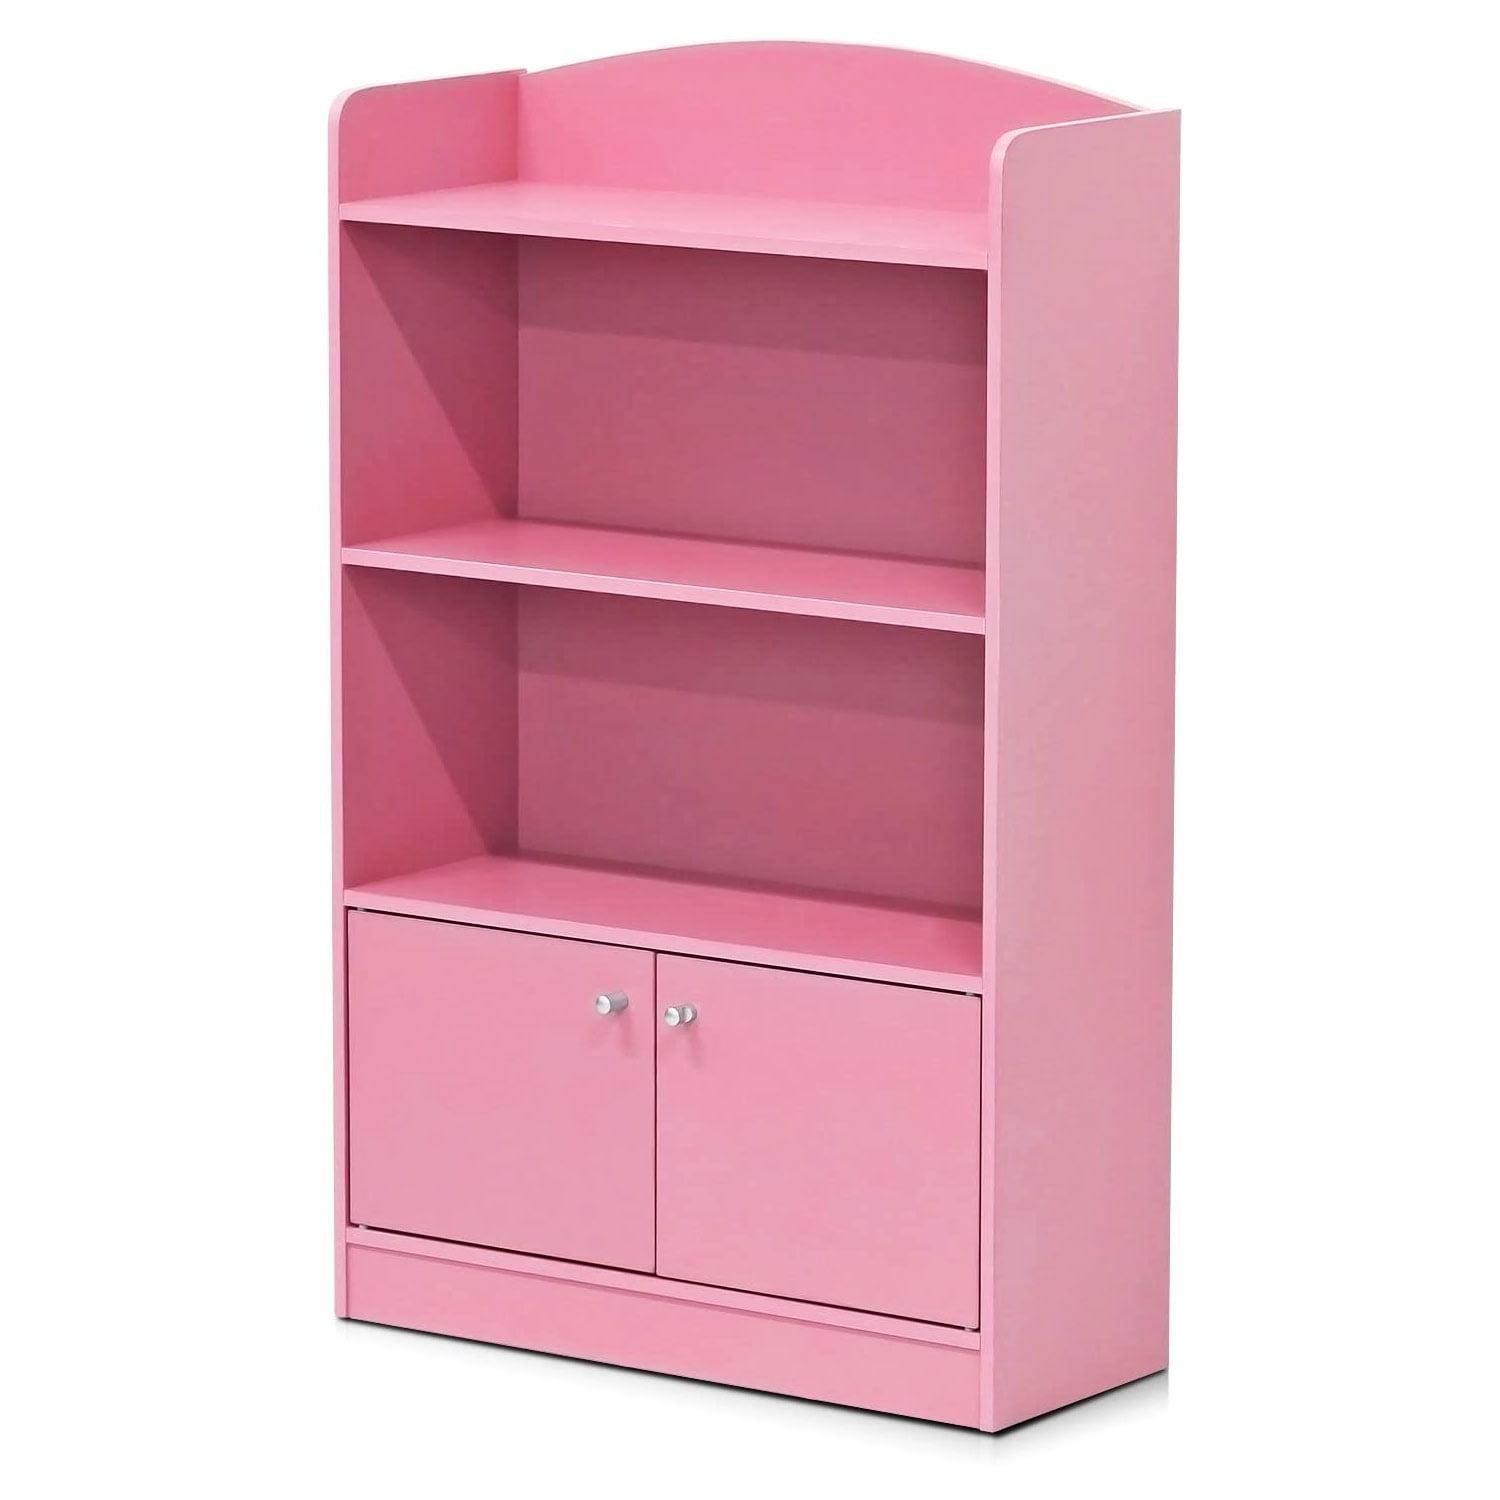 Freestanding Pink Laminated Engineered Wood Kids' Bookshelf with Storage Cabinet